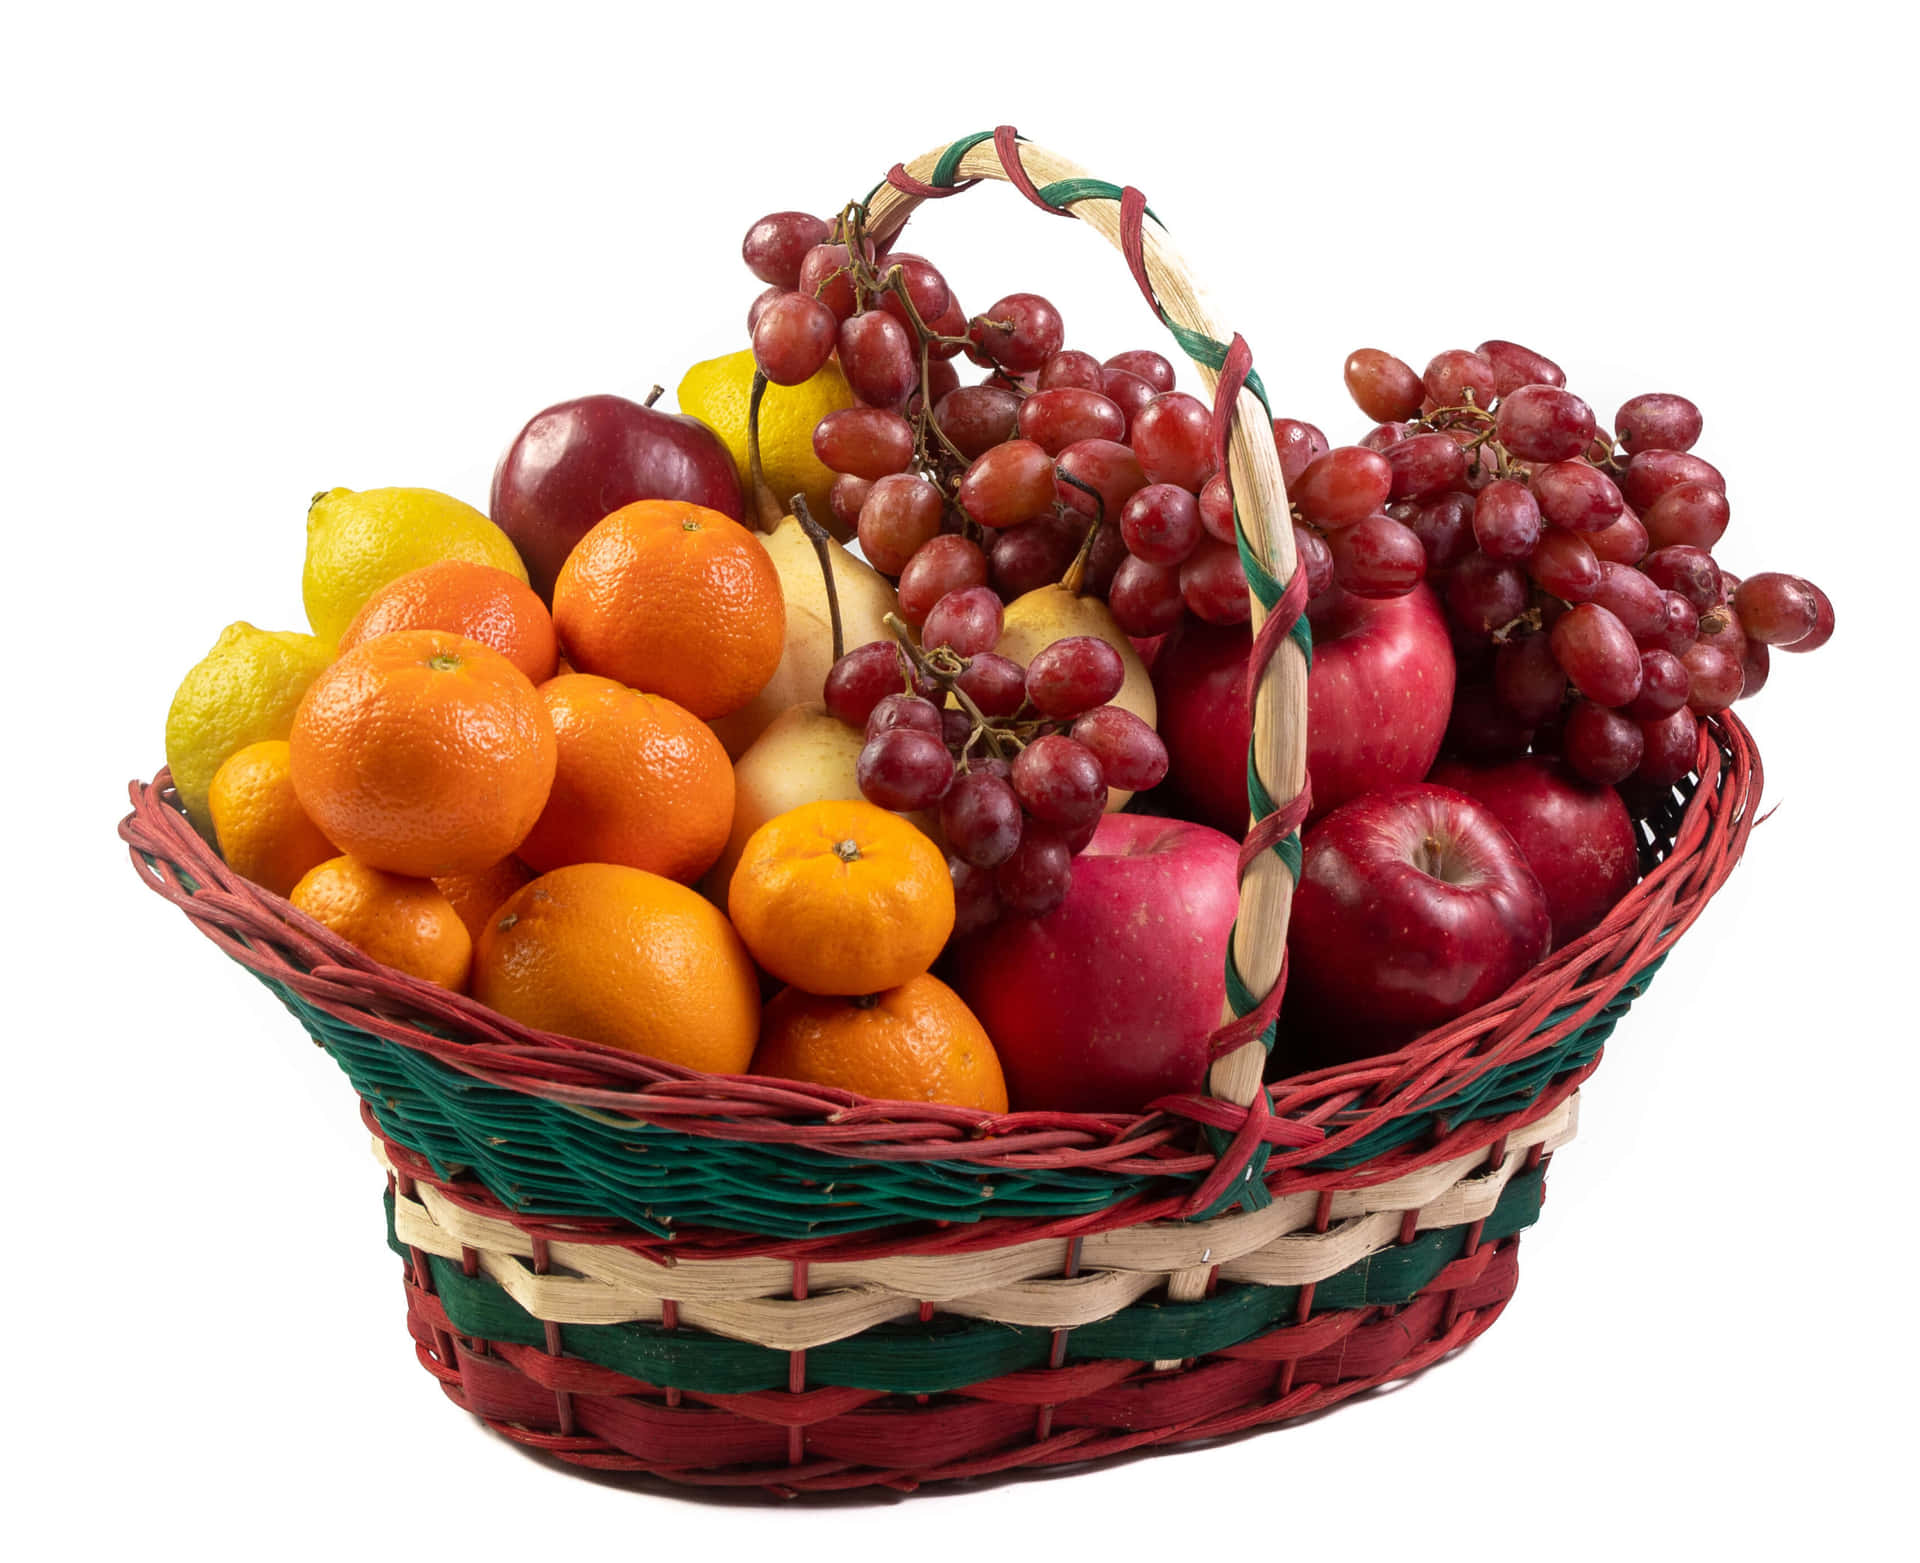 Baskets of Fresh Fruits